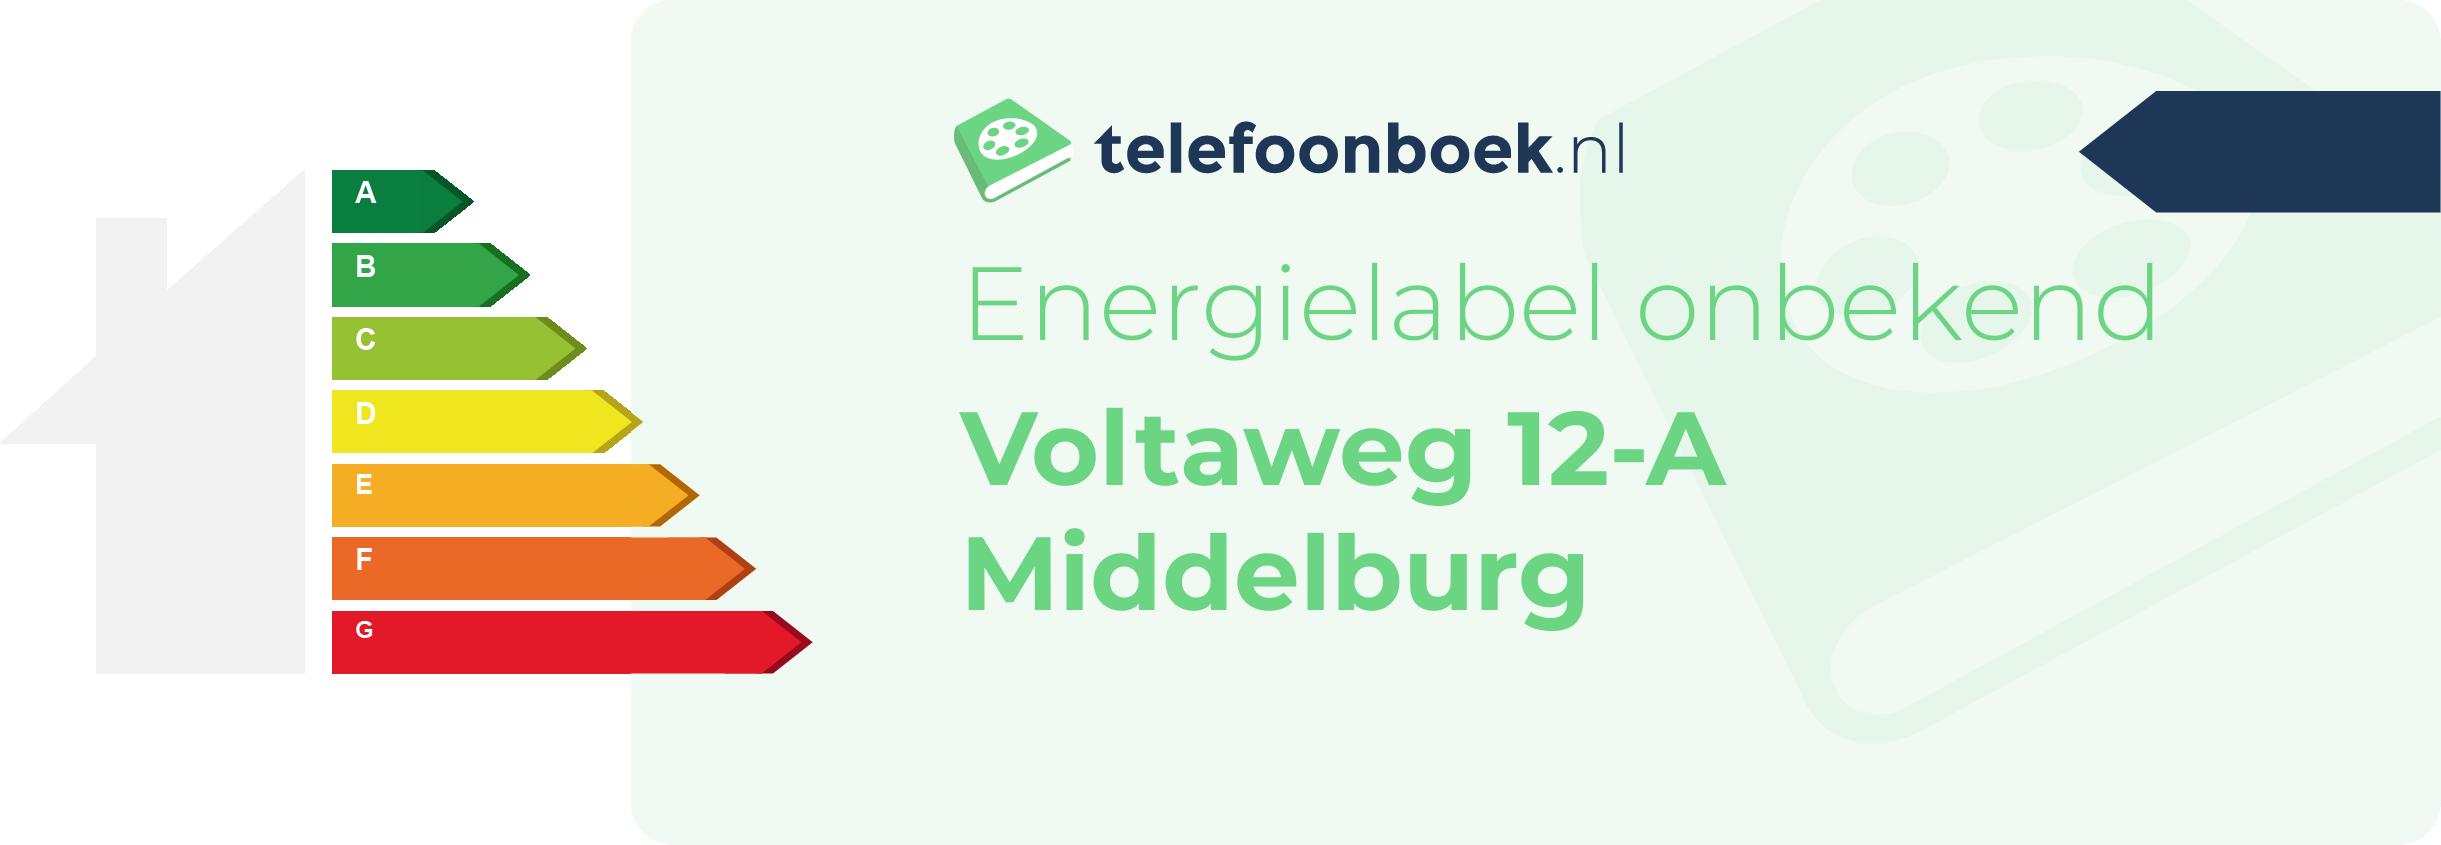 Energielabel Voltaweg 12-A Middelburg